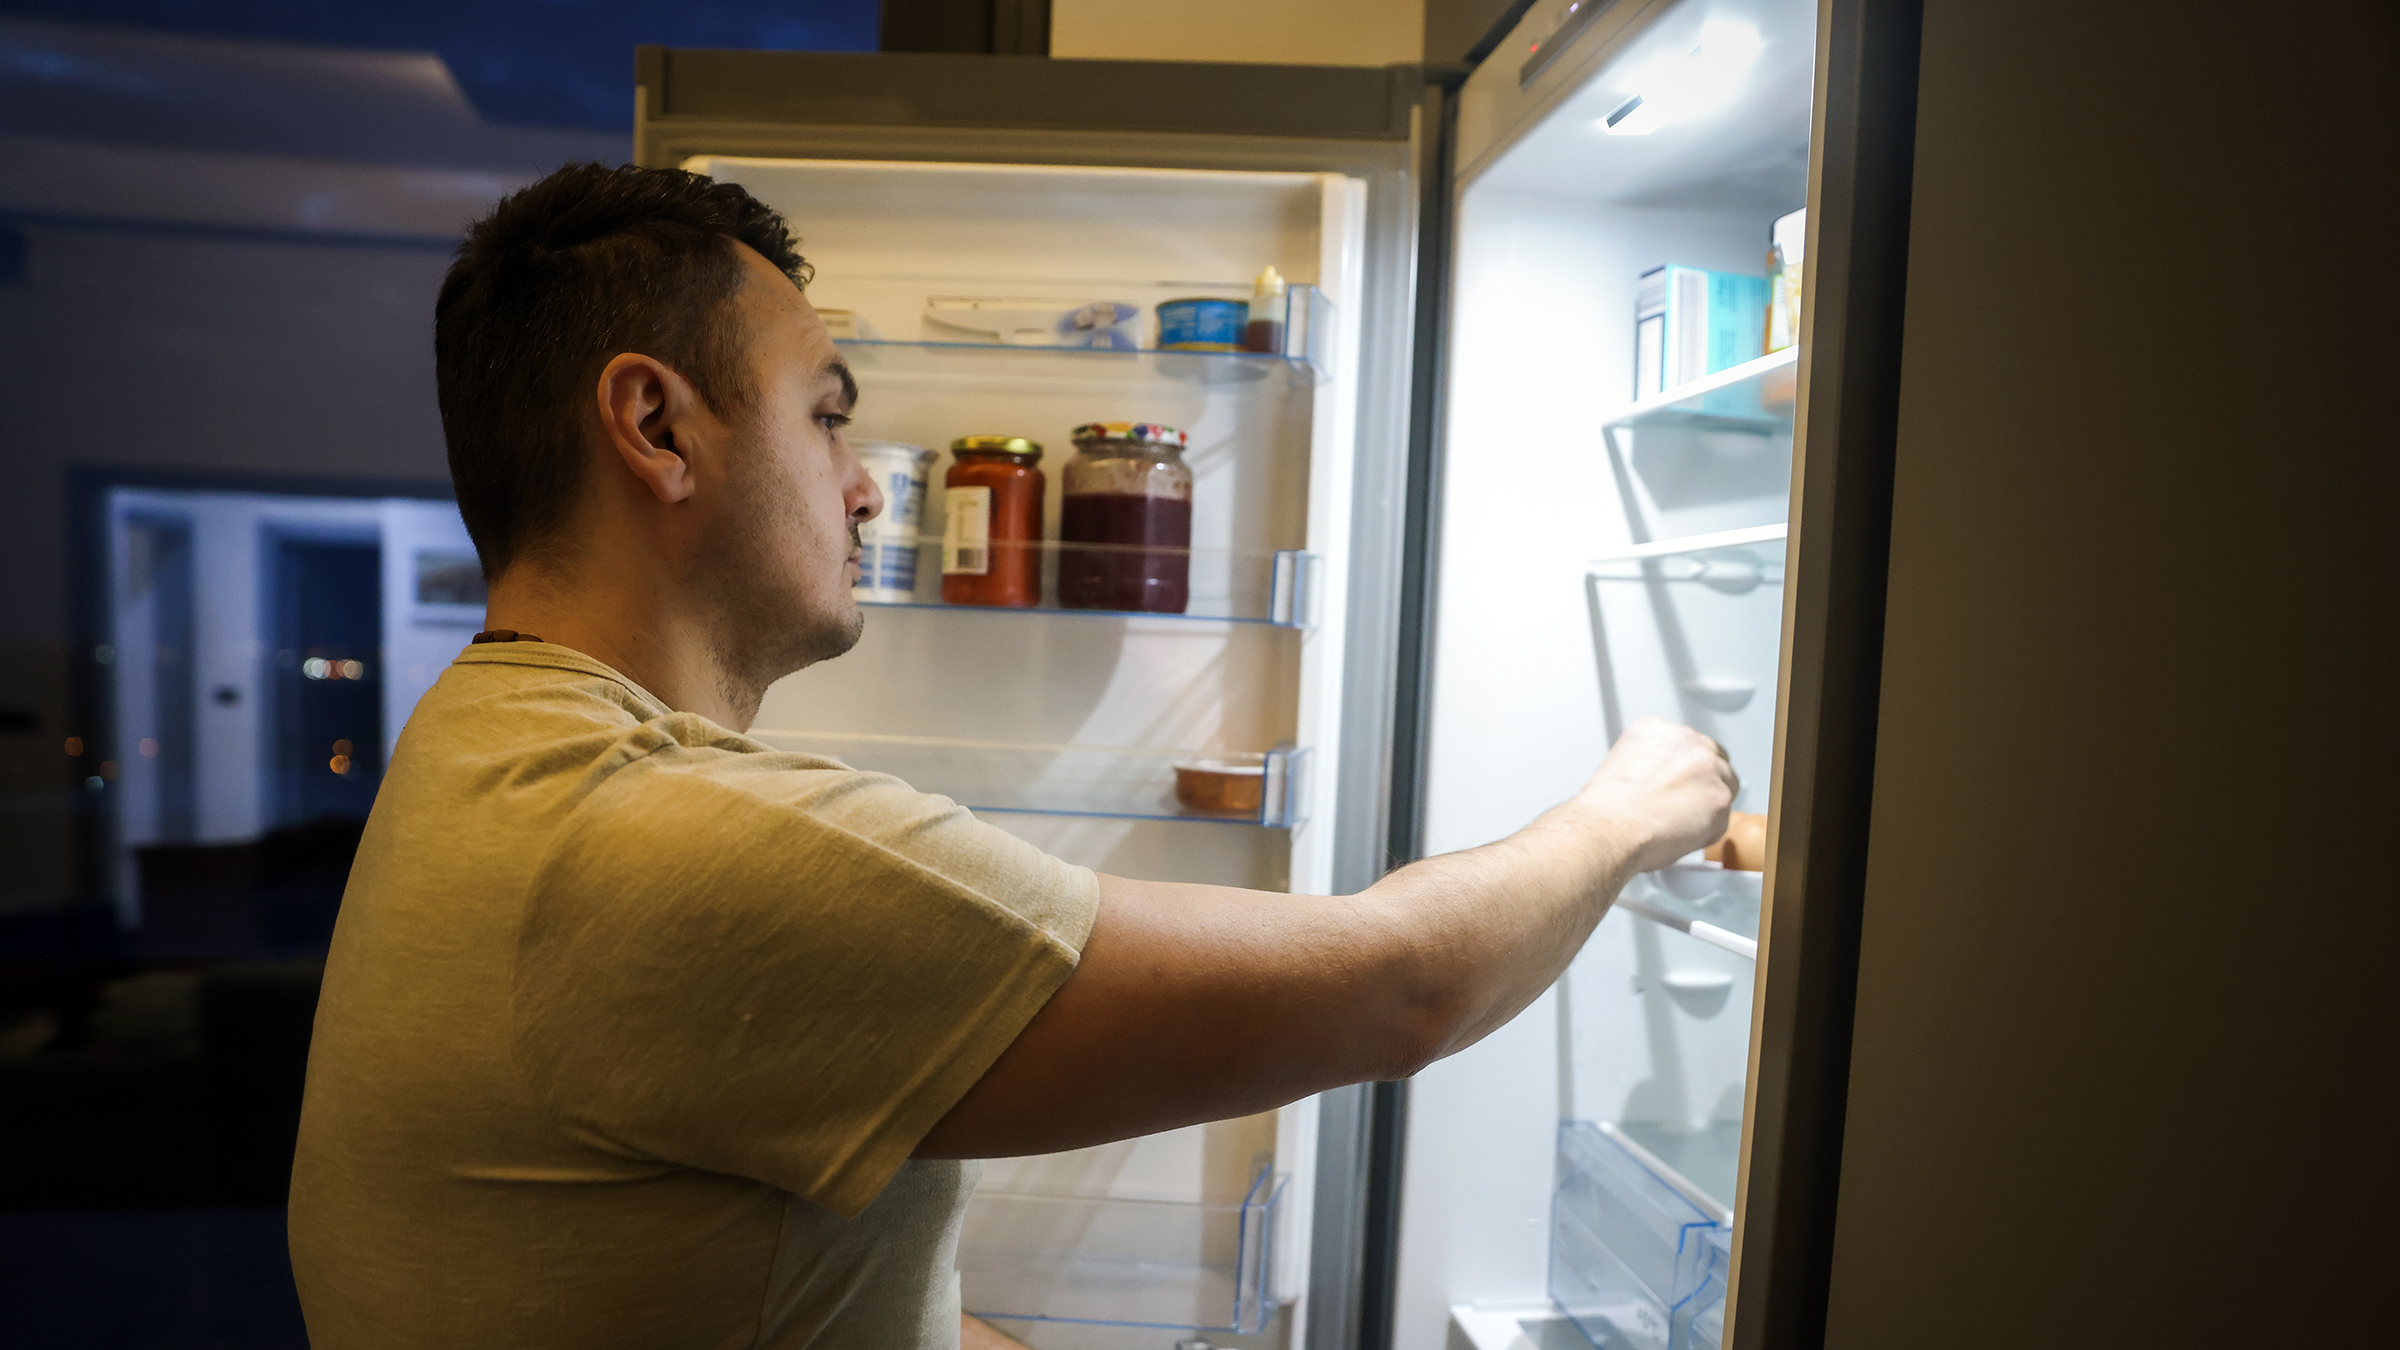 Is your fridge too hot?